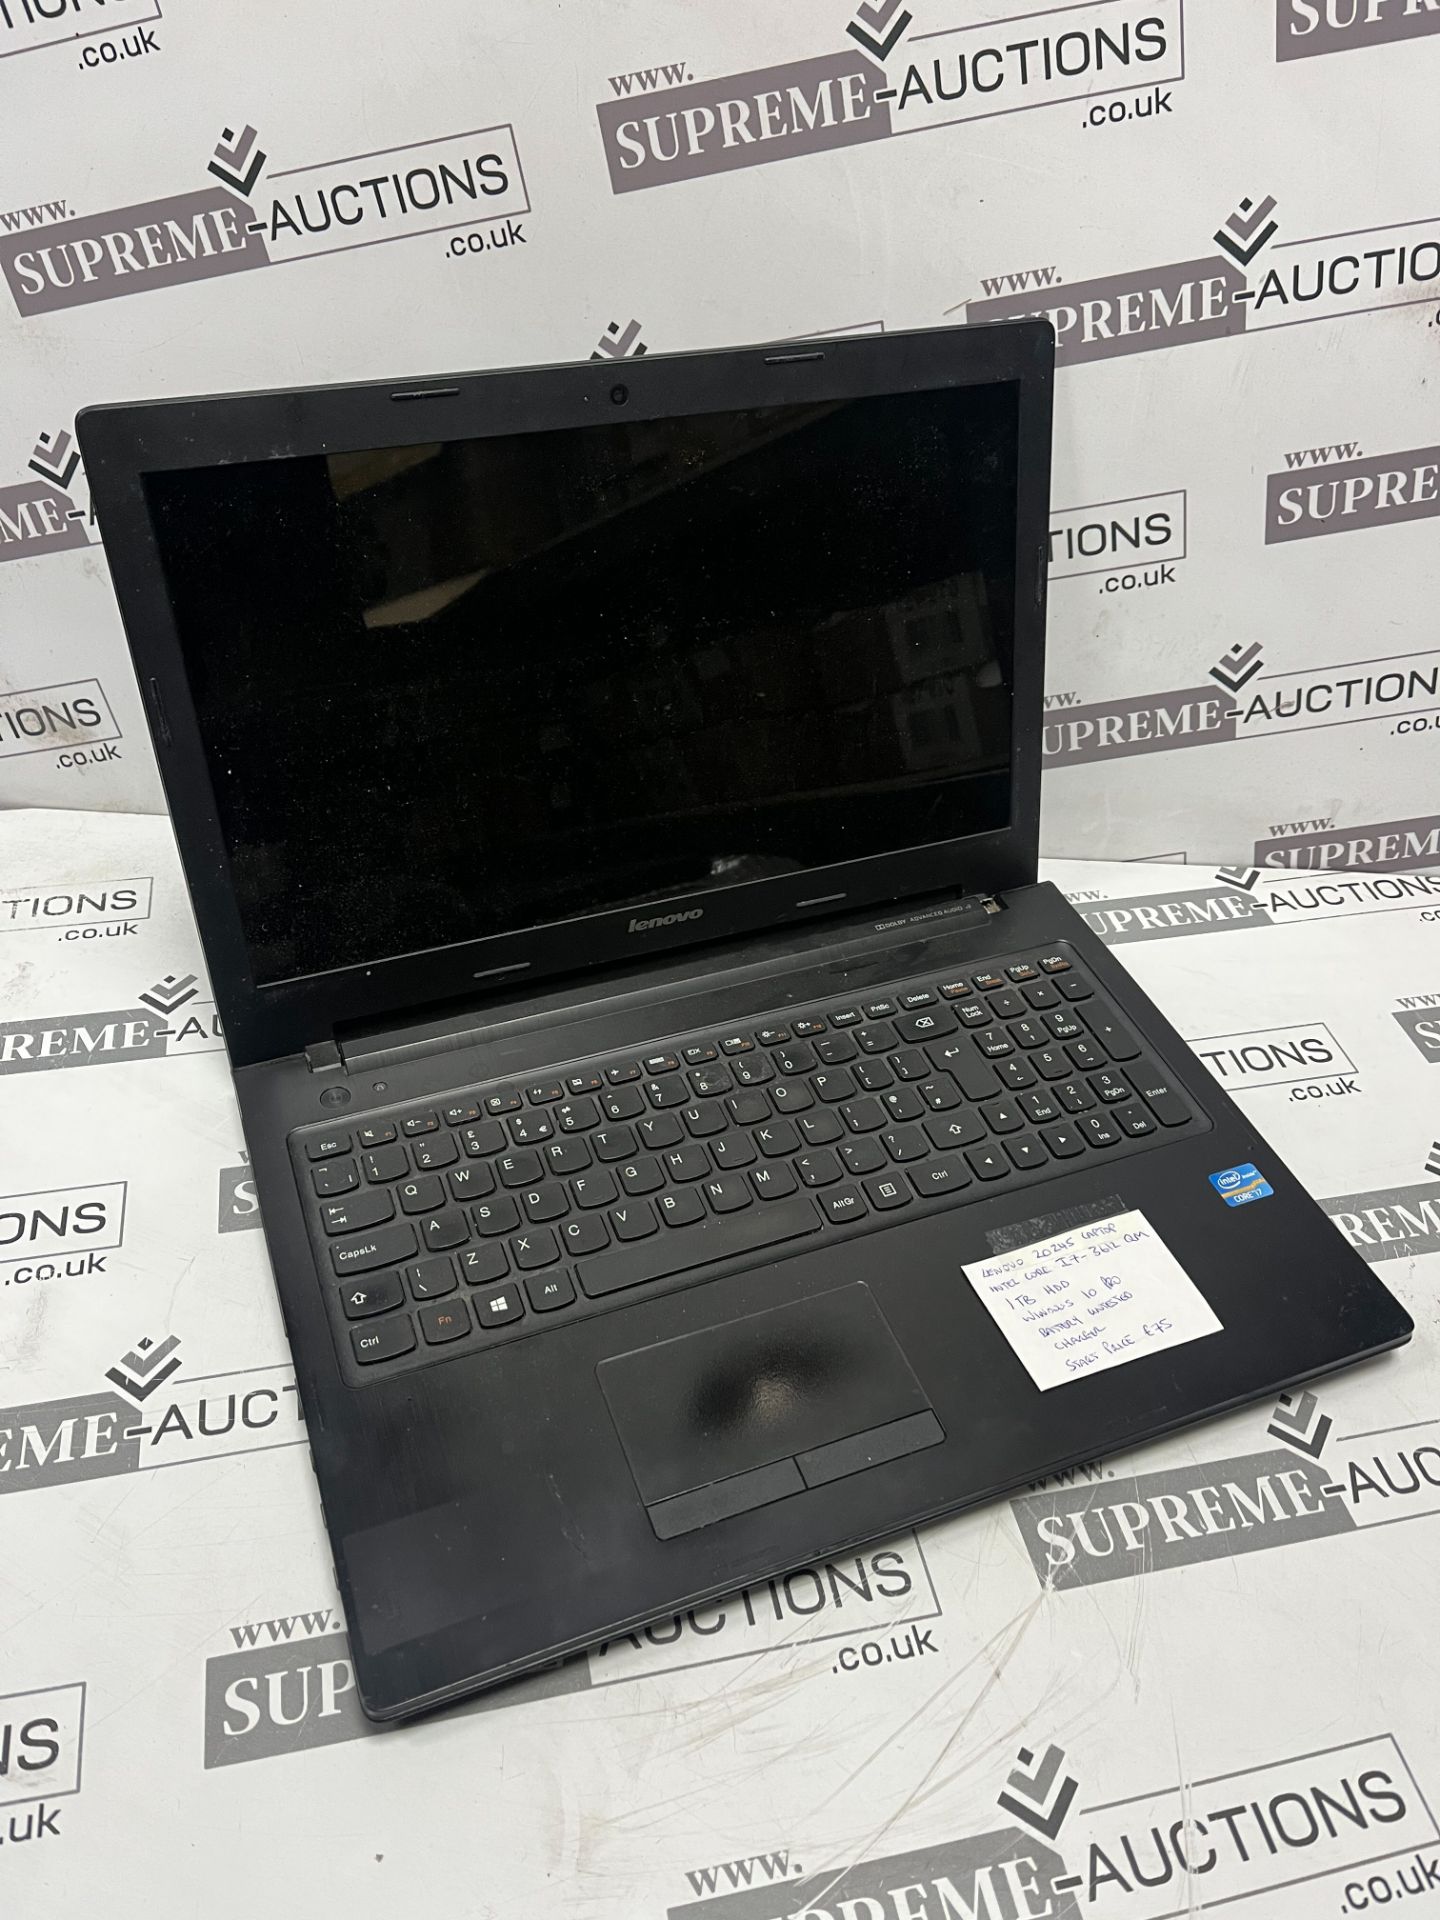 LENOVO G500S 20245 15.6" Windows 10 Pro Laptop. Intel Core i7-3612QM, 8GB RAM, 1TB Hard Drive, DVD-